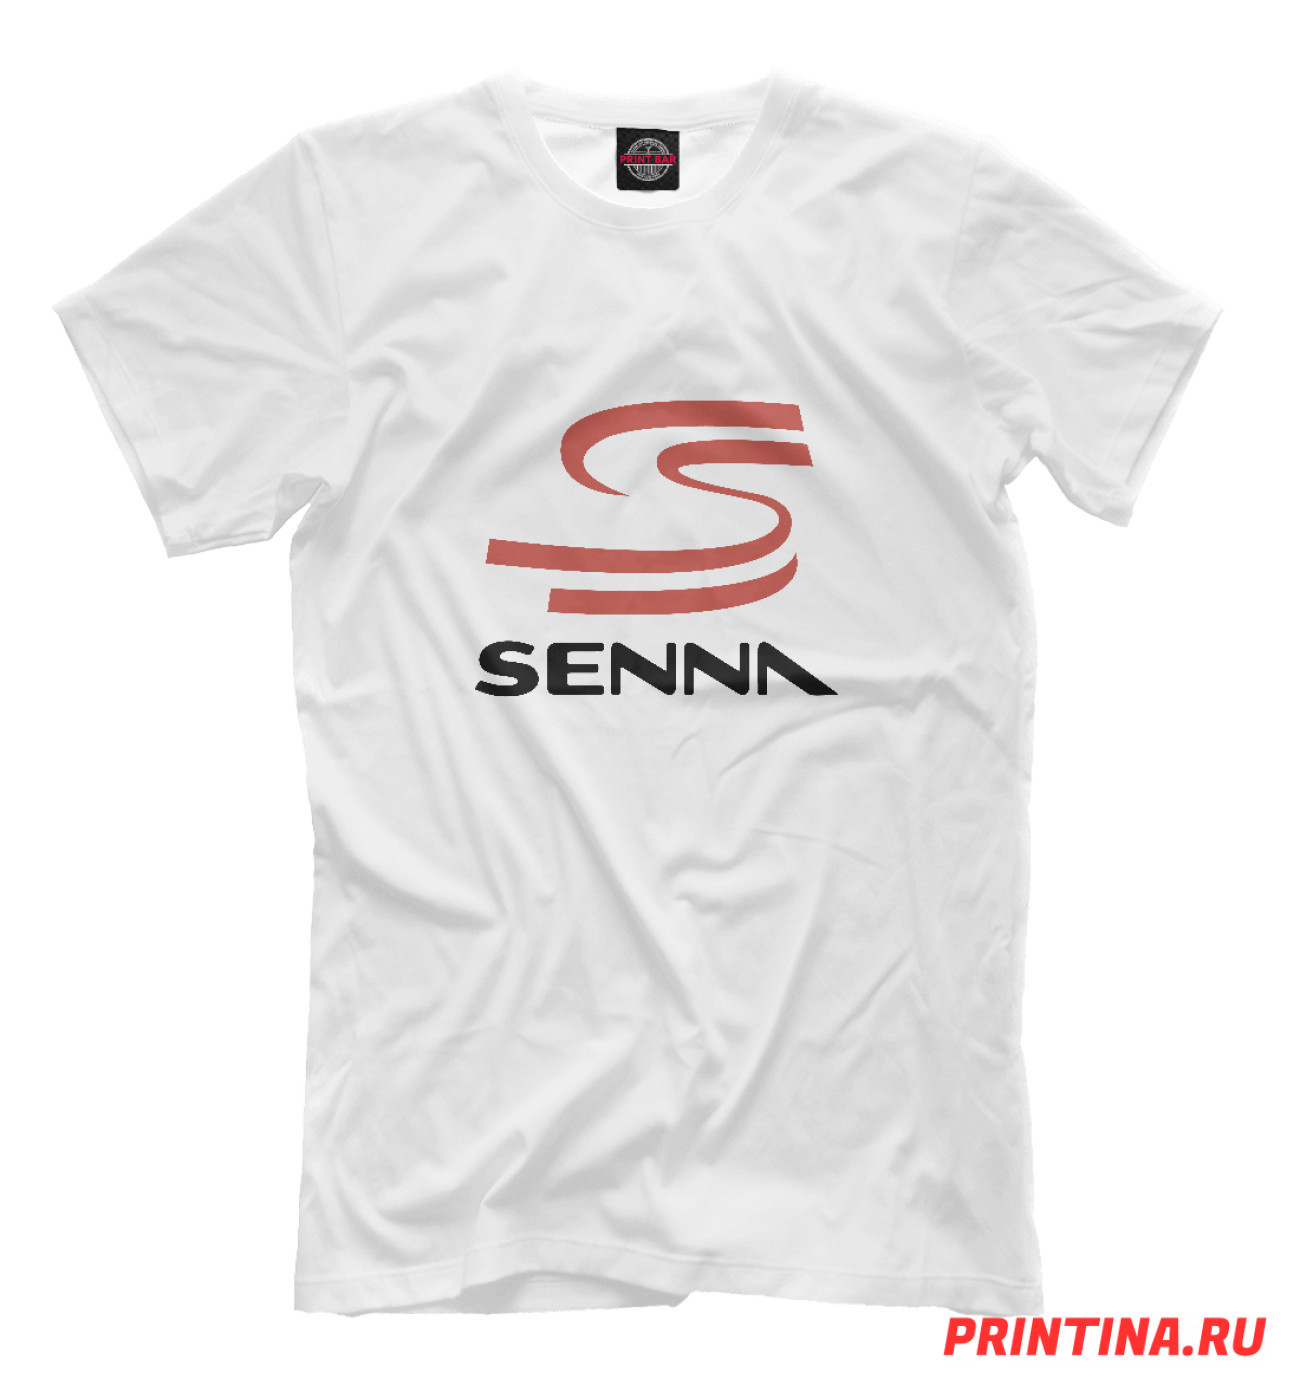 Мужская Футболка Senna Logo, артикул: FR1-653678-fut-2